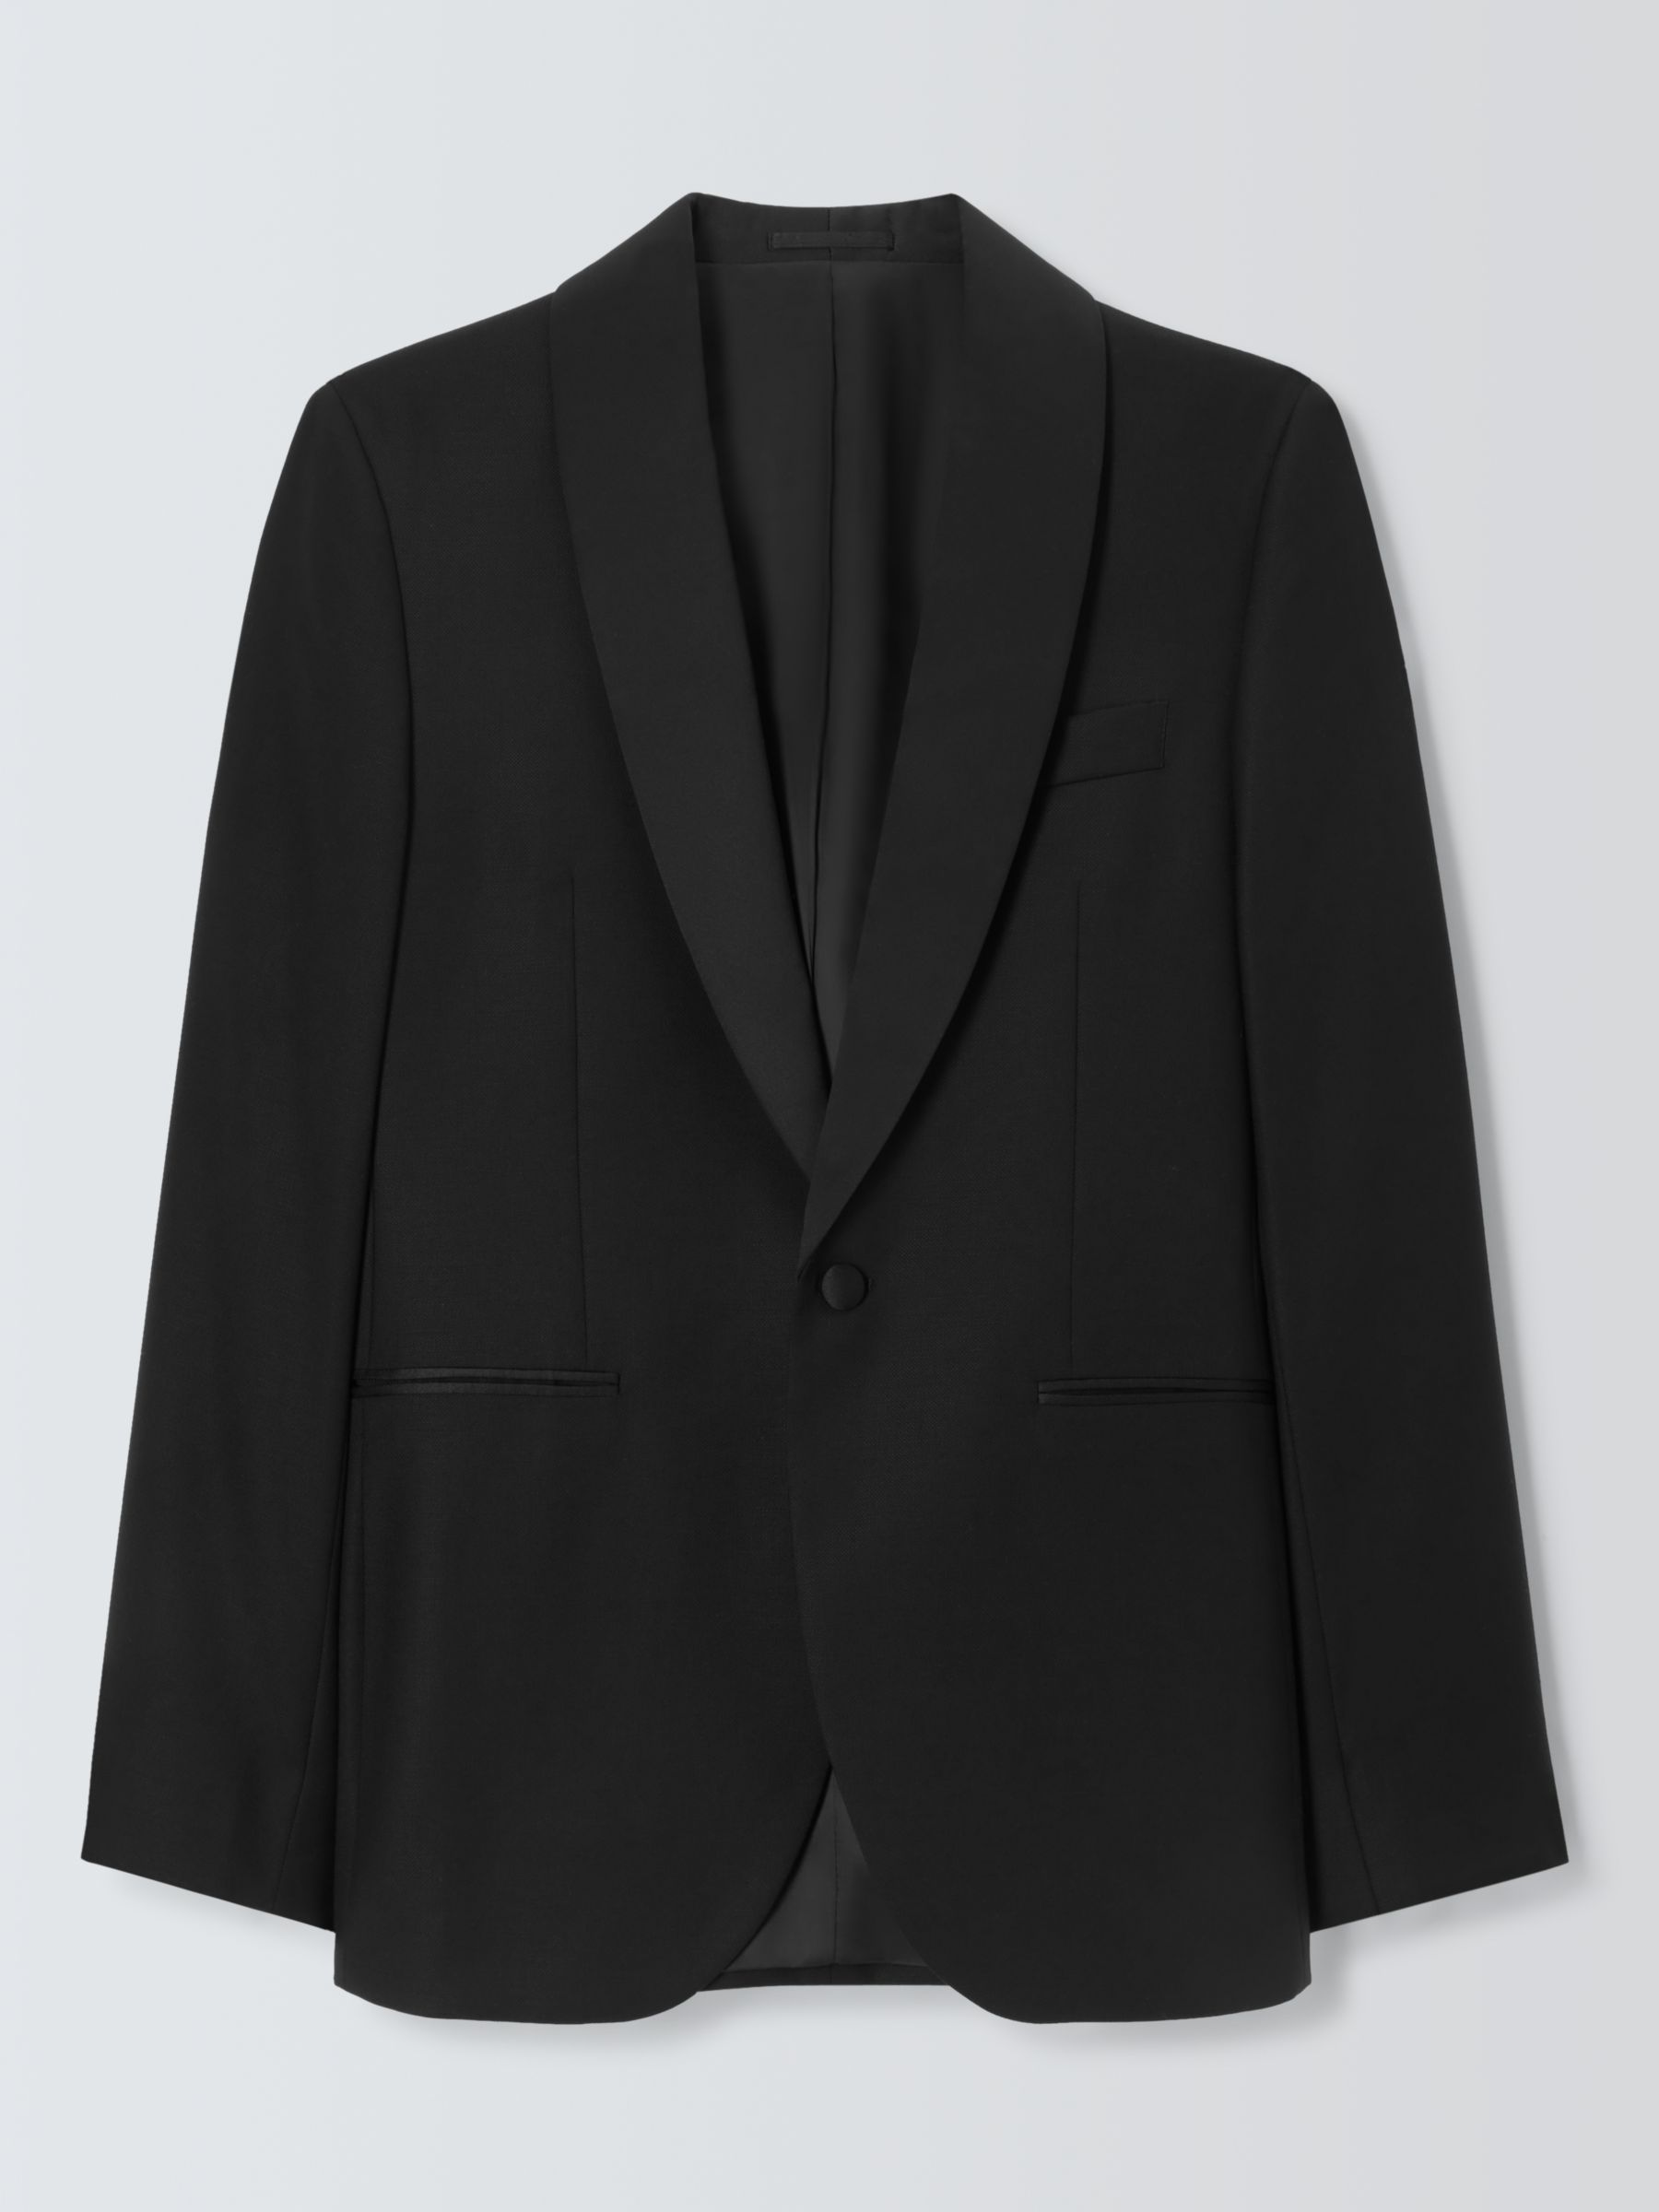 John Lewis Shawl Lapel Basket Weave Regular Fit Suit Jacket, Black